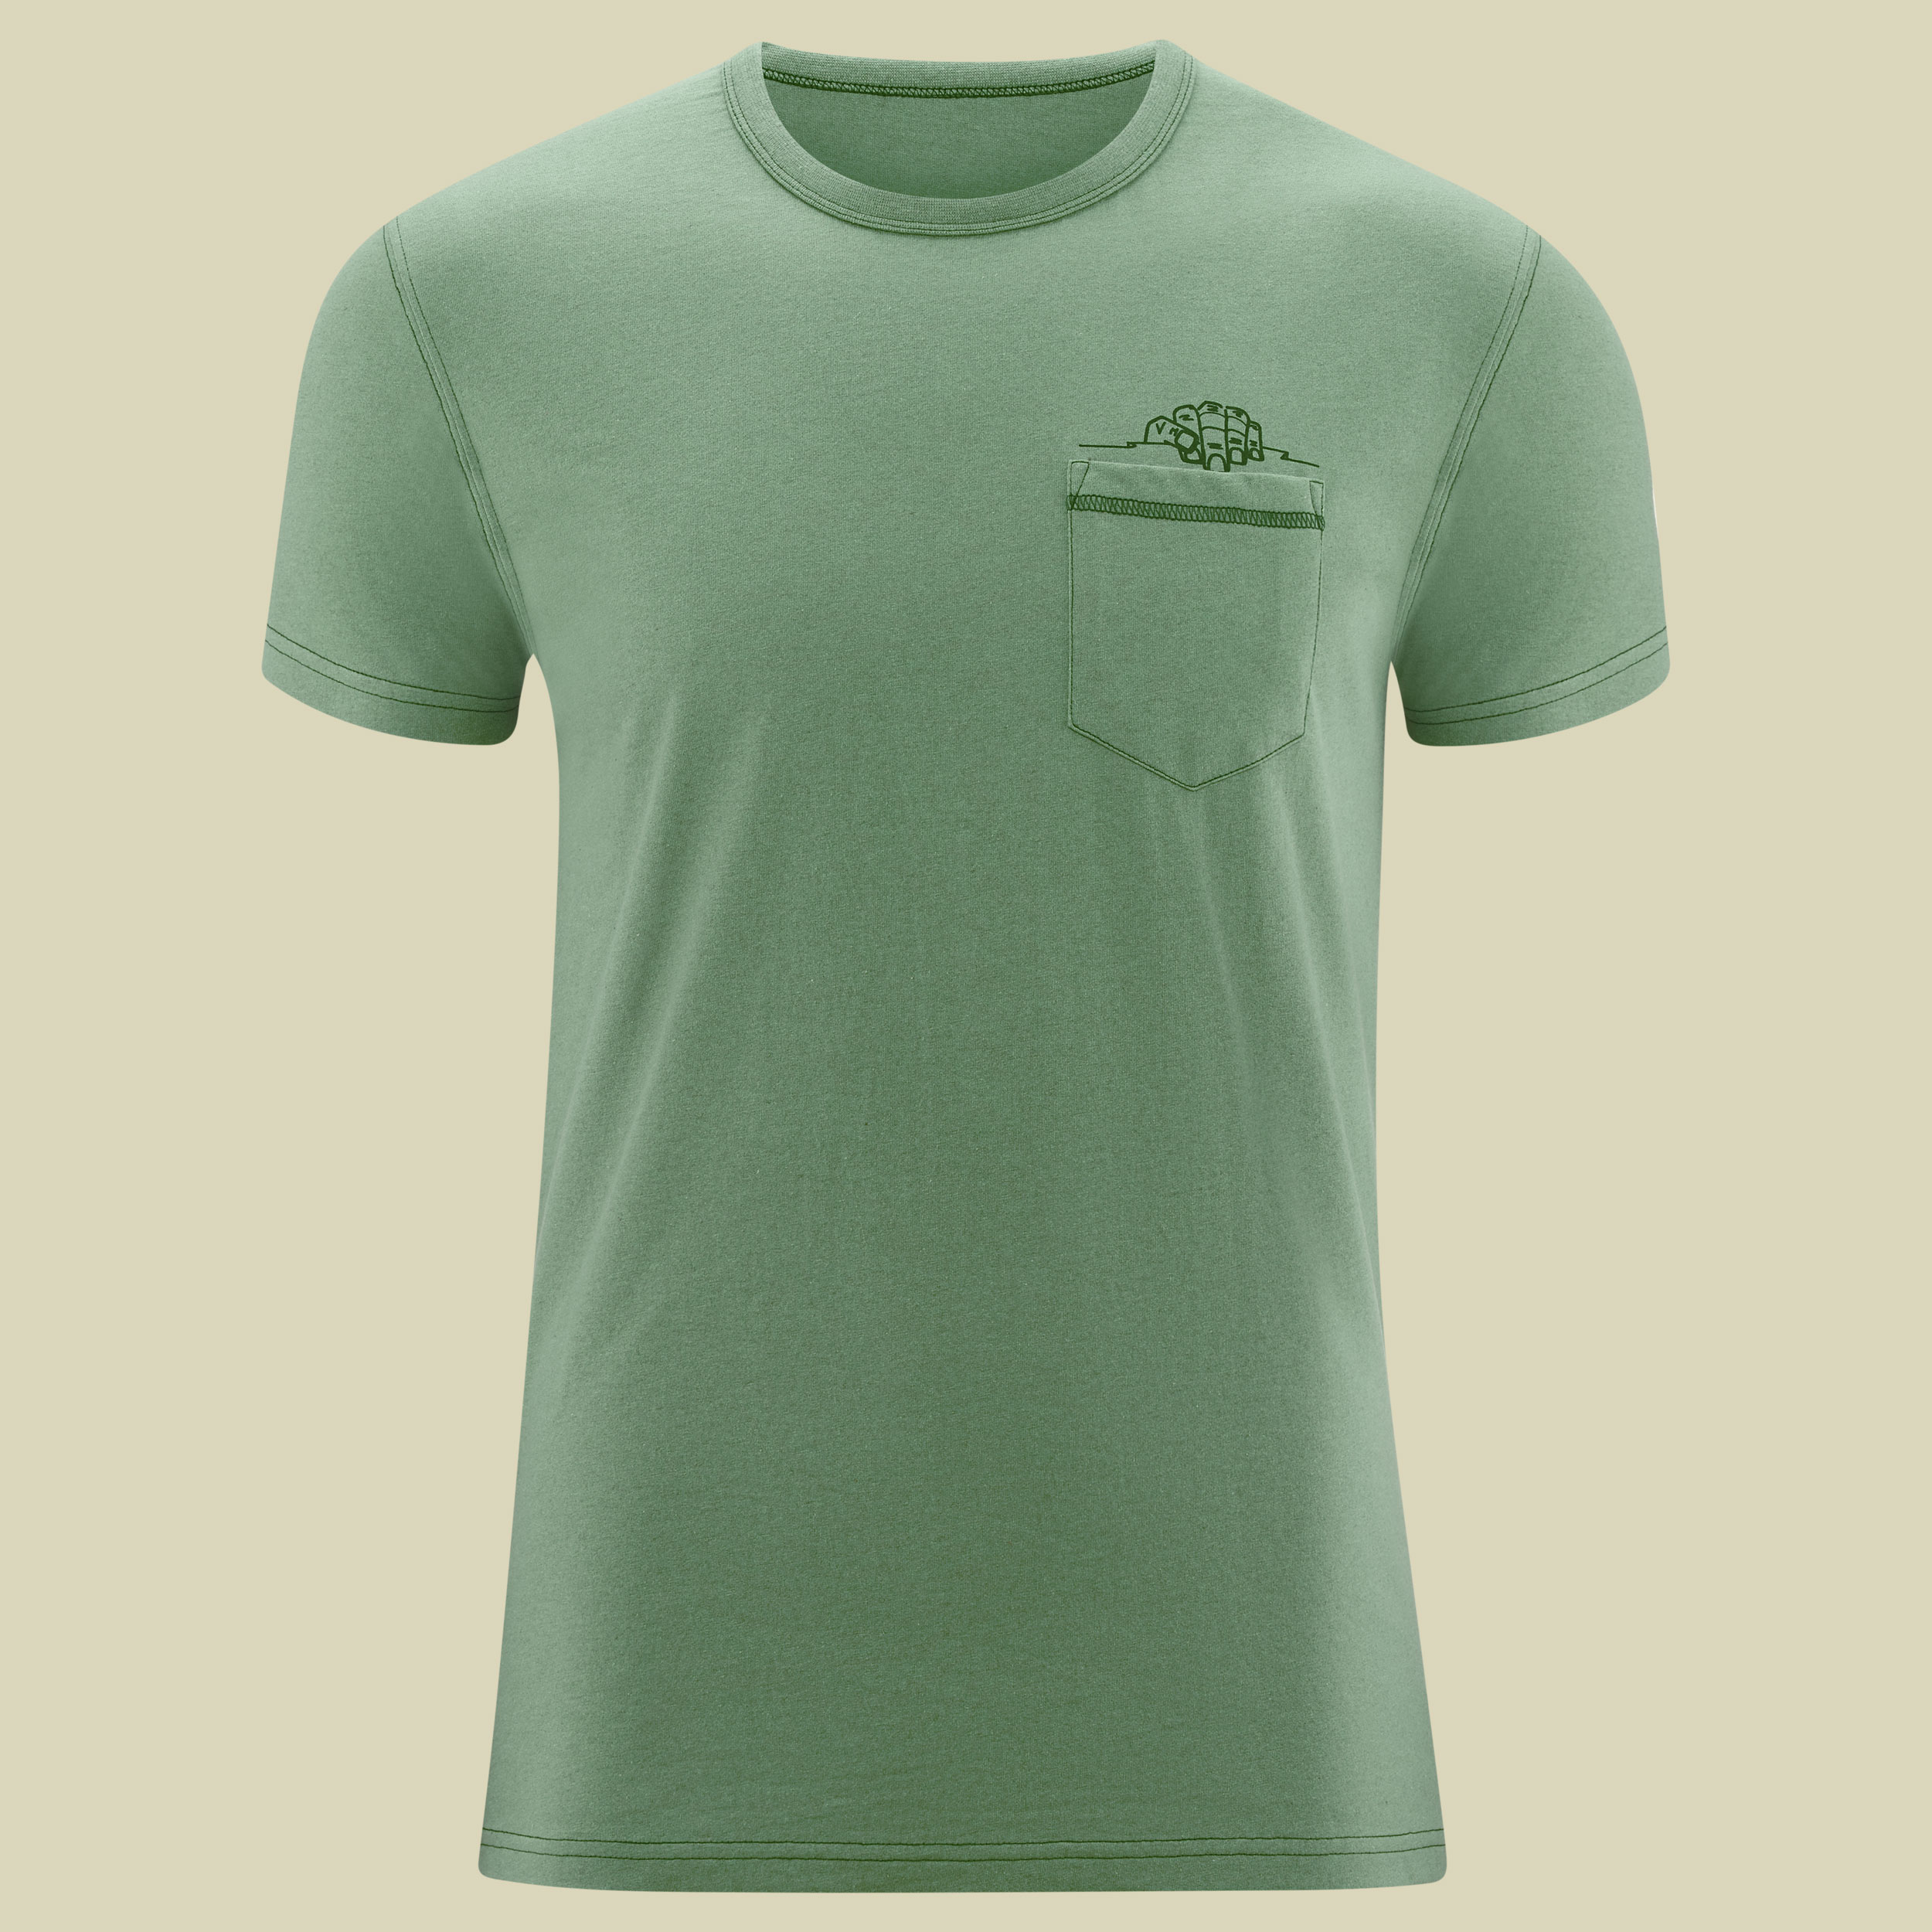 Heso T-Shirt III Men grün XL - kale